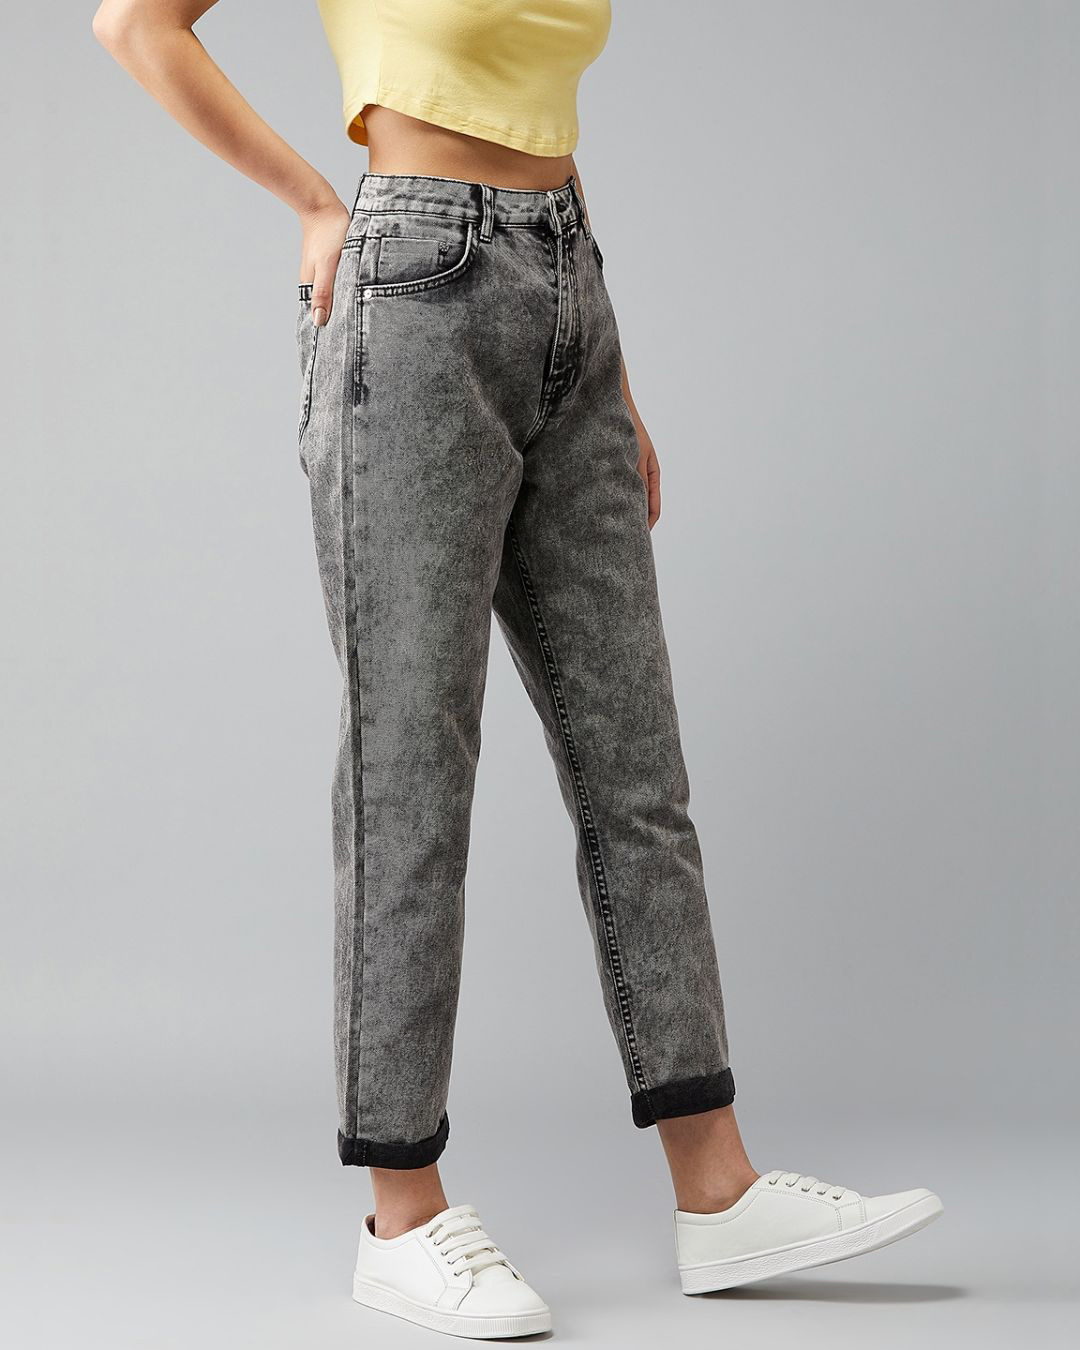 Buy Women's Grey High Rise Slim Fit Jeans Online at Bewakoof